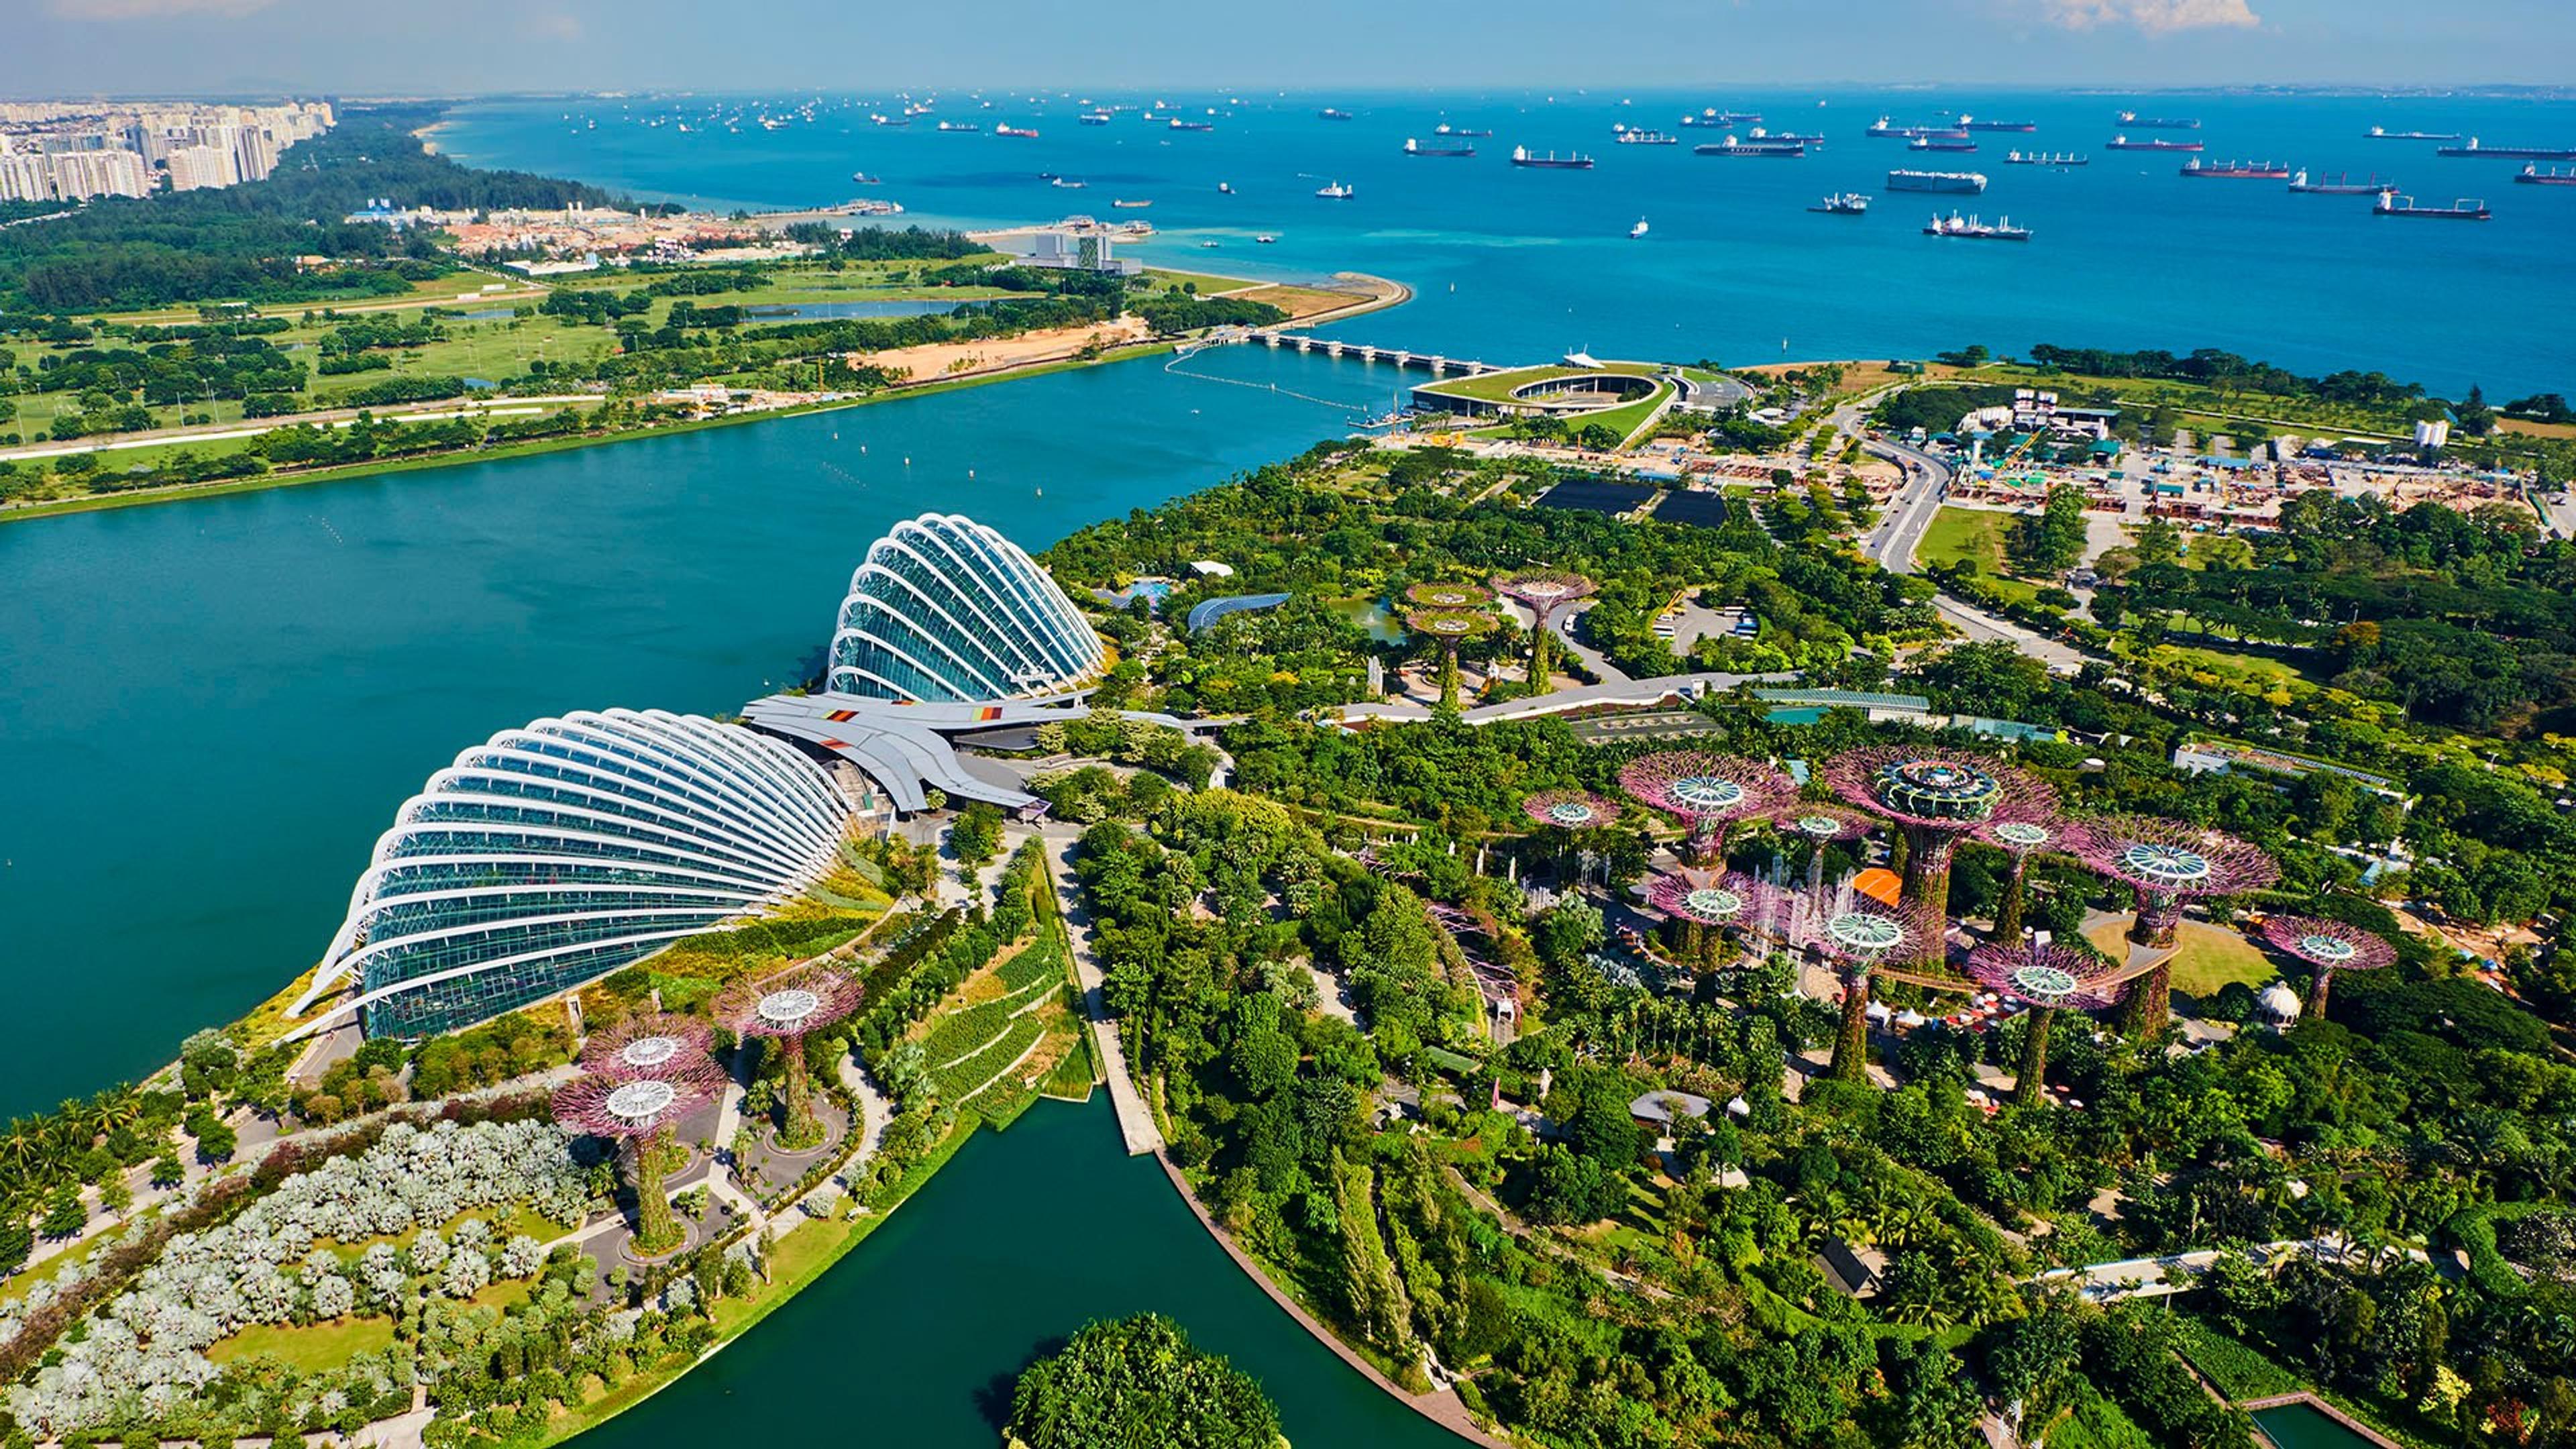 Singapore by med hav, båter og byhage